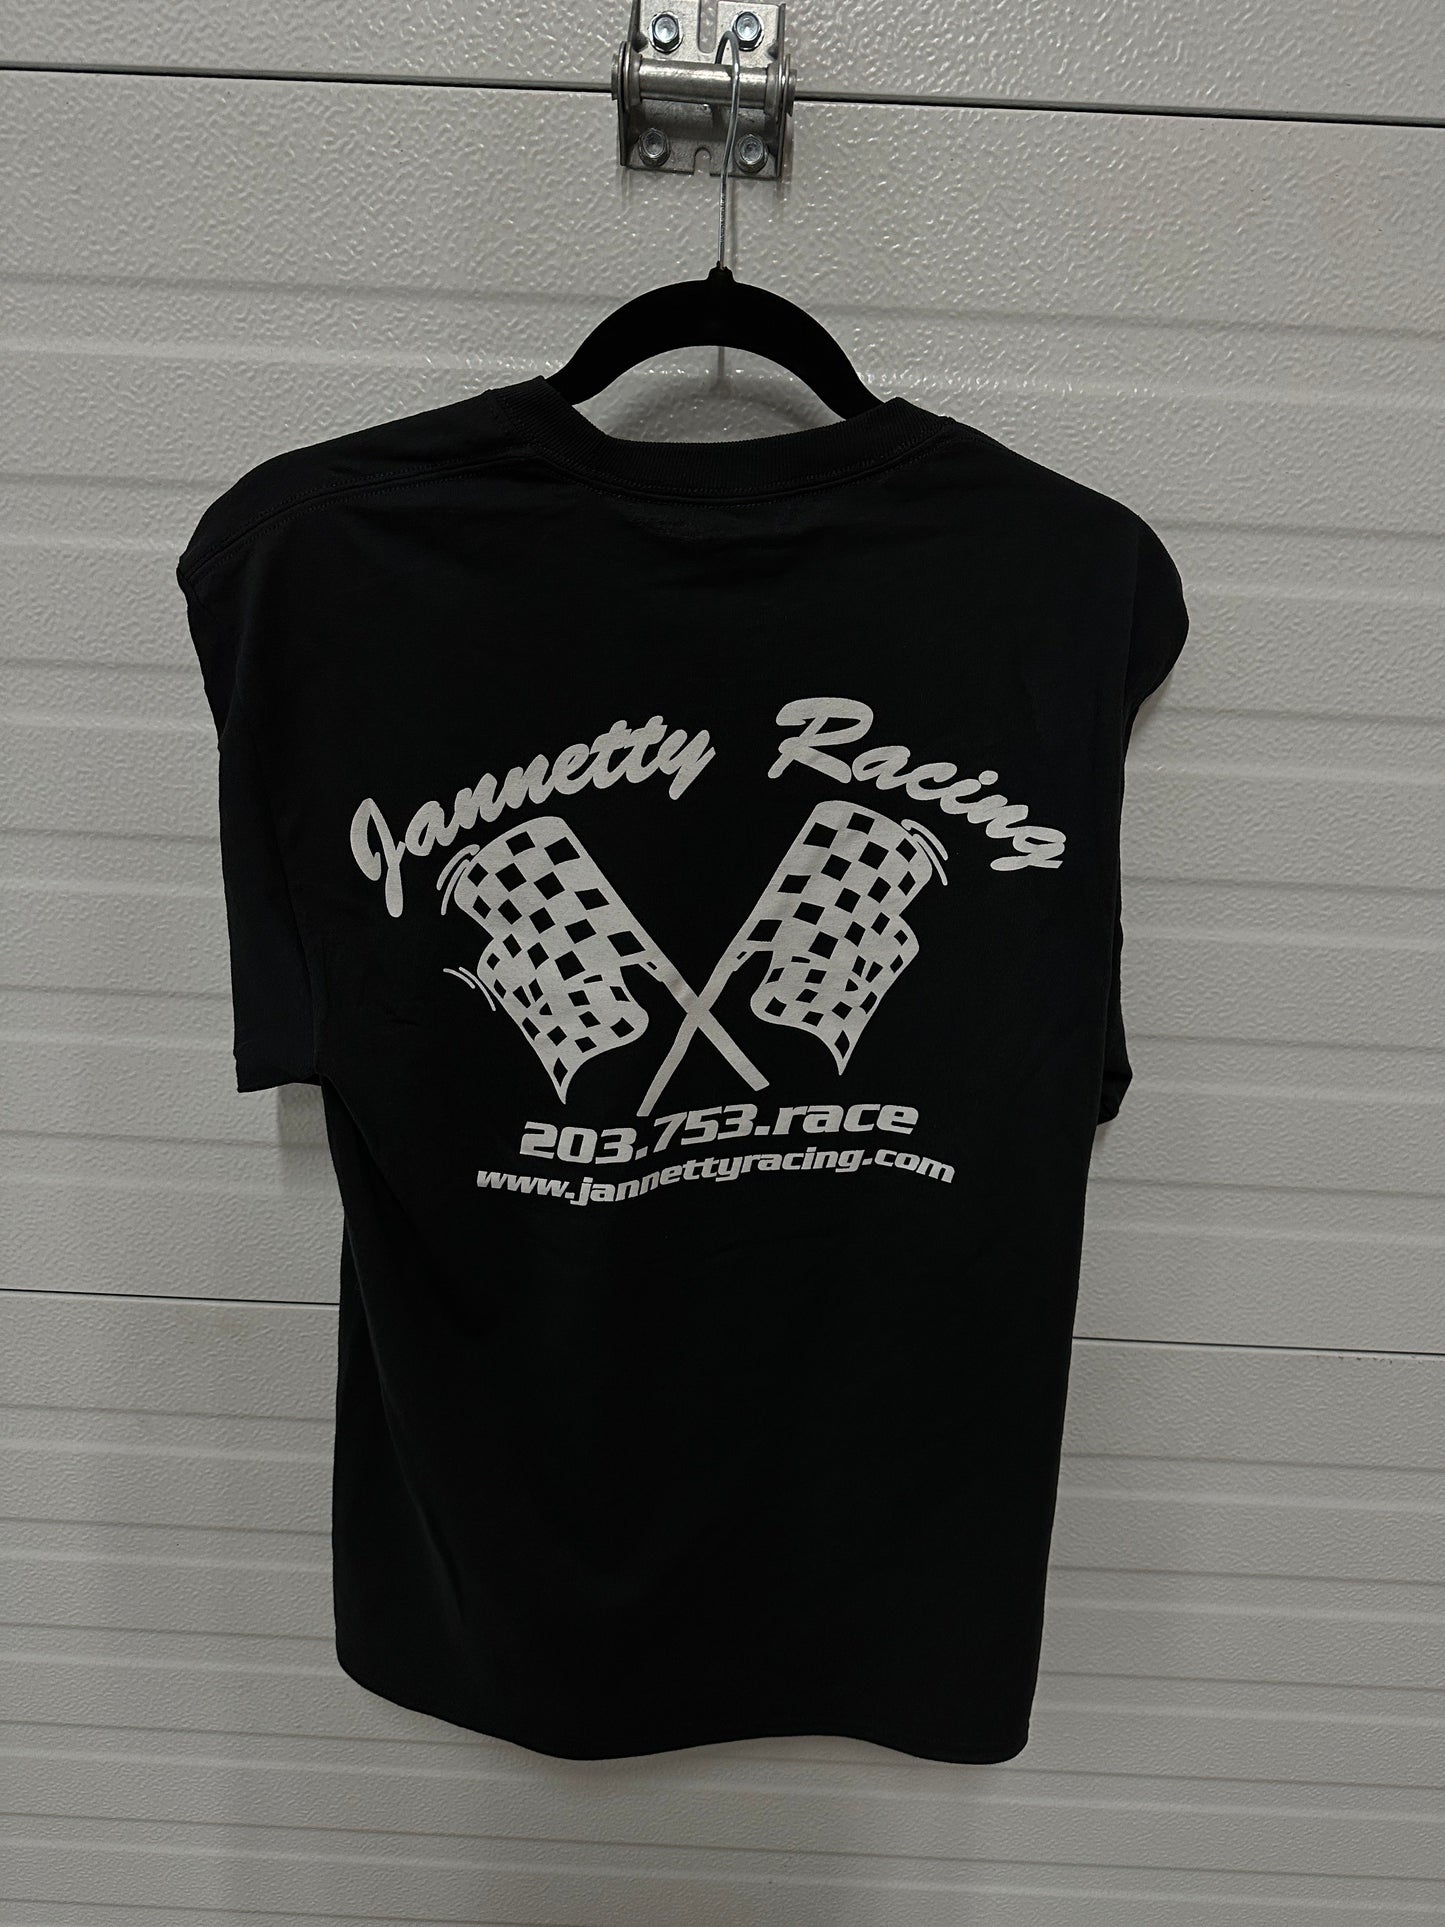 Jannetty Racing New Design T-Shirt